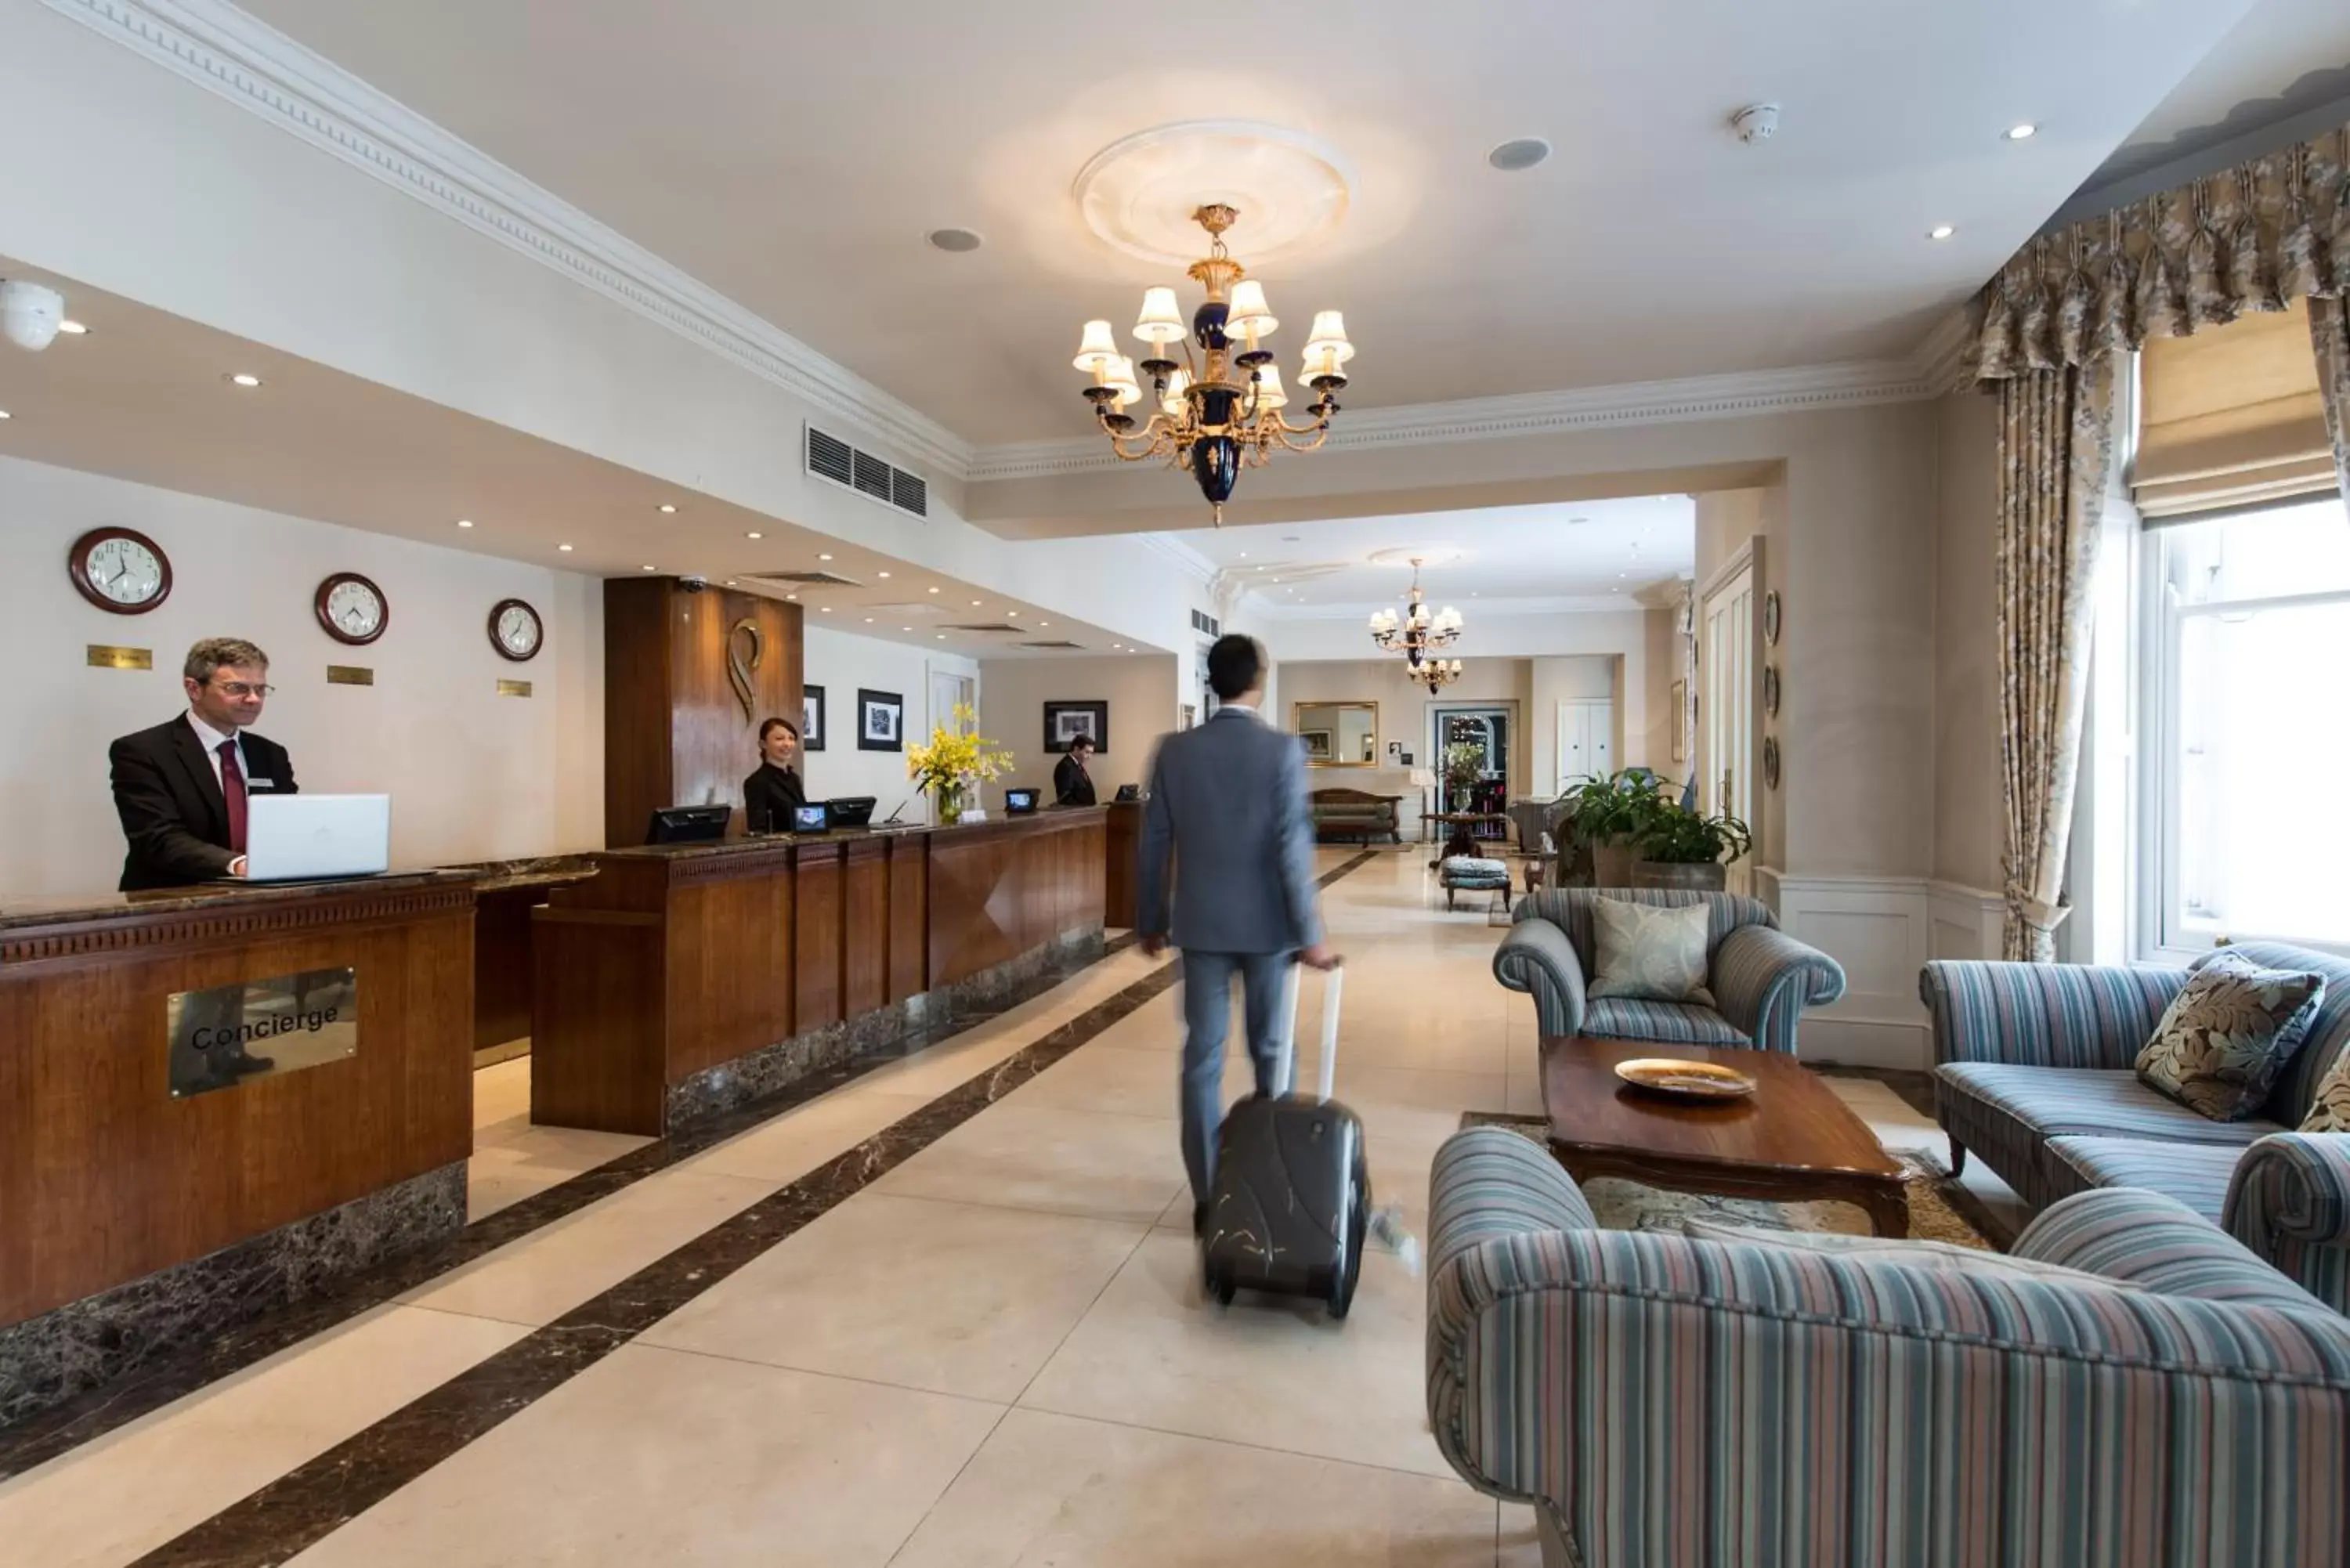 Lobby or reception in Park International Hotel